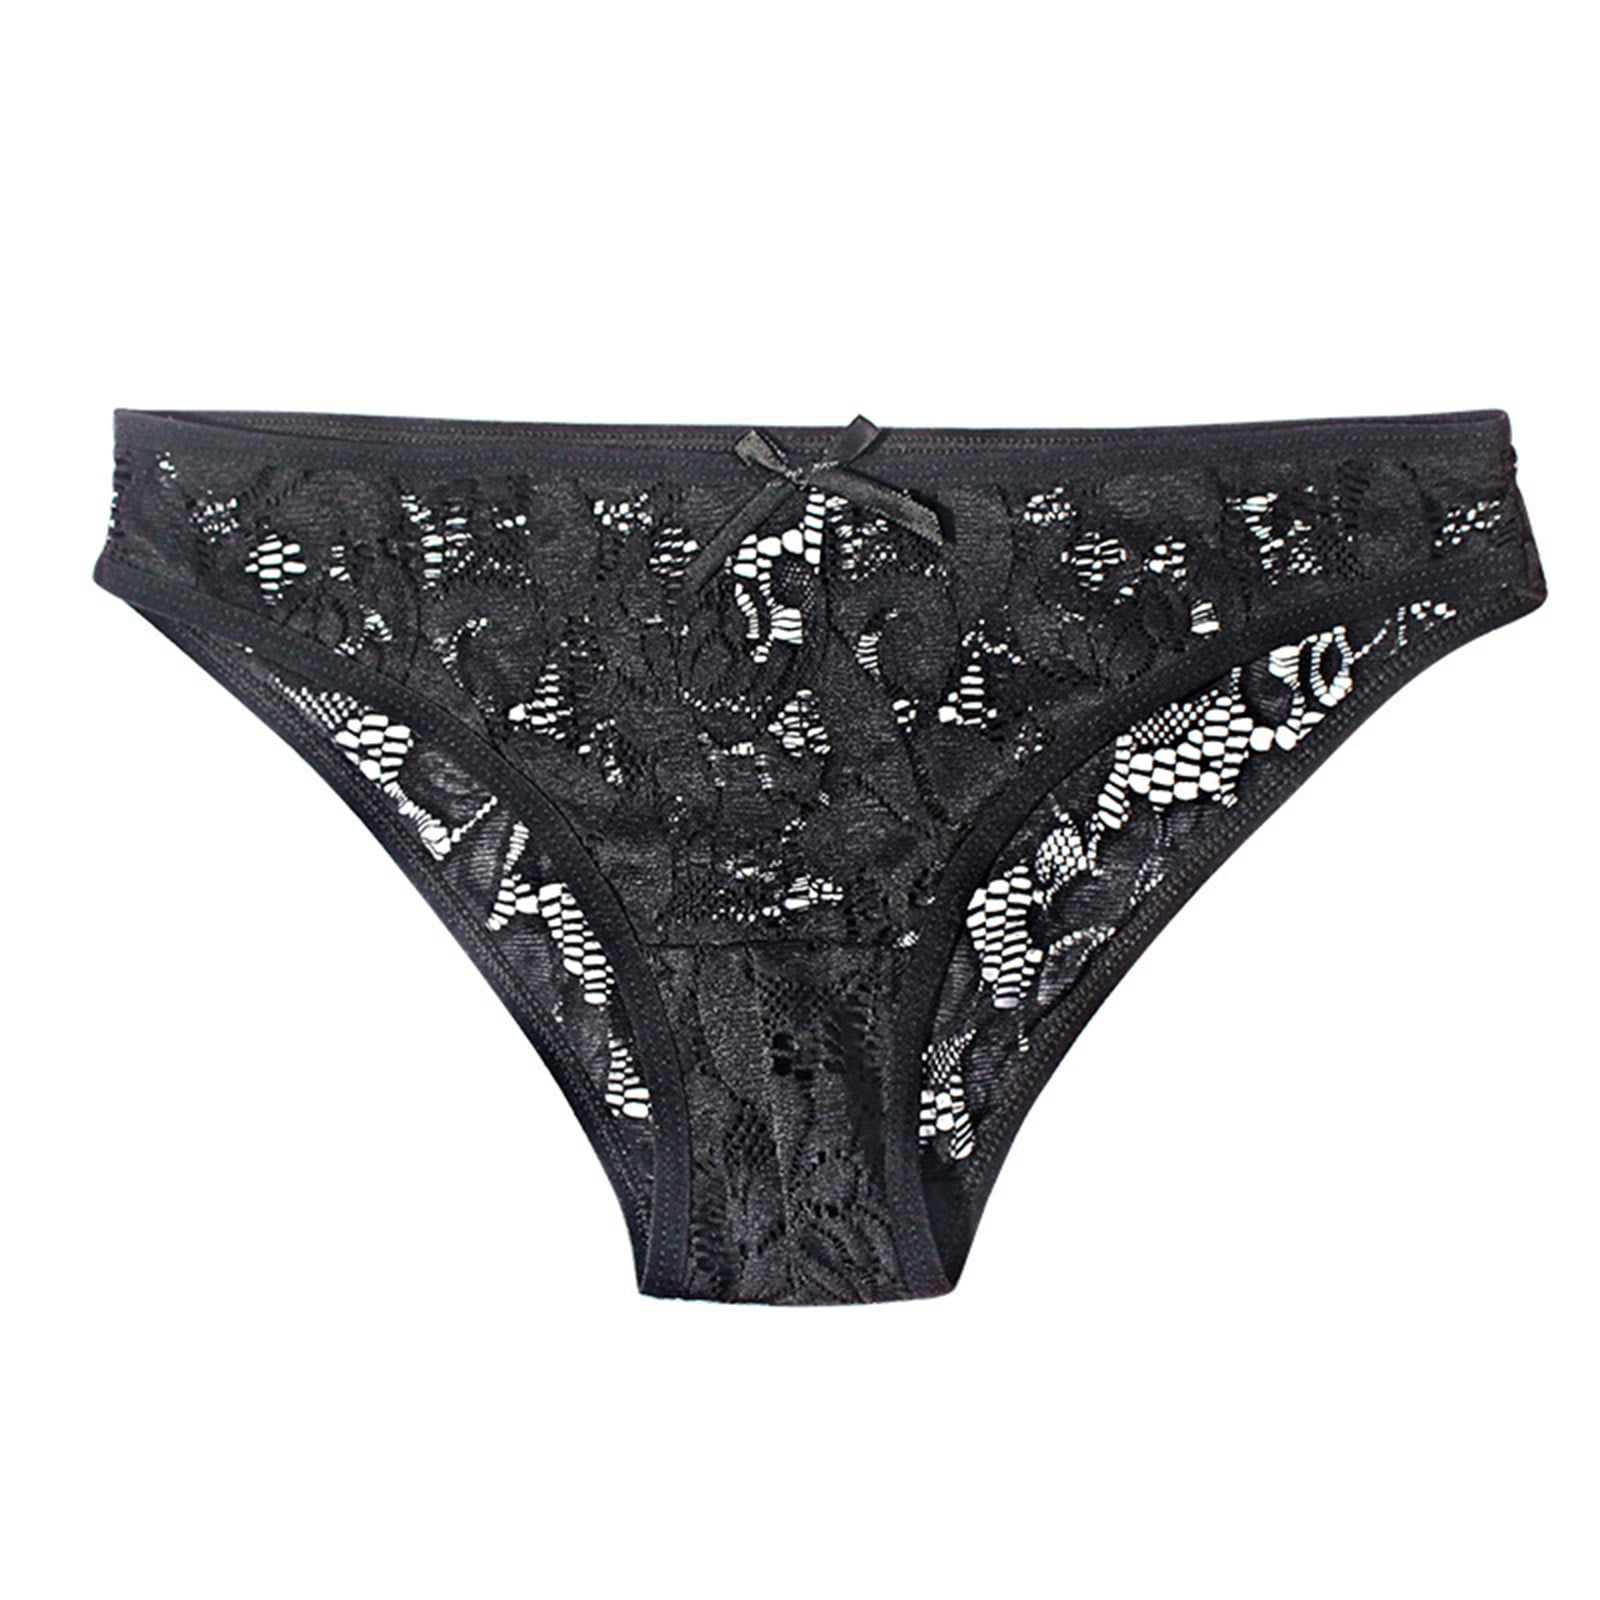 CBGELRT Underwear Women Lace Floral Panties Women's